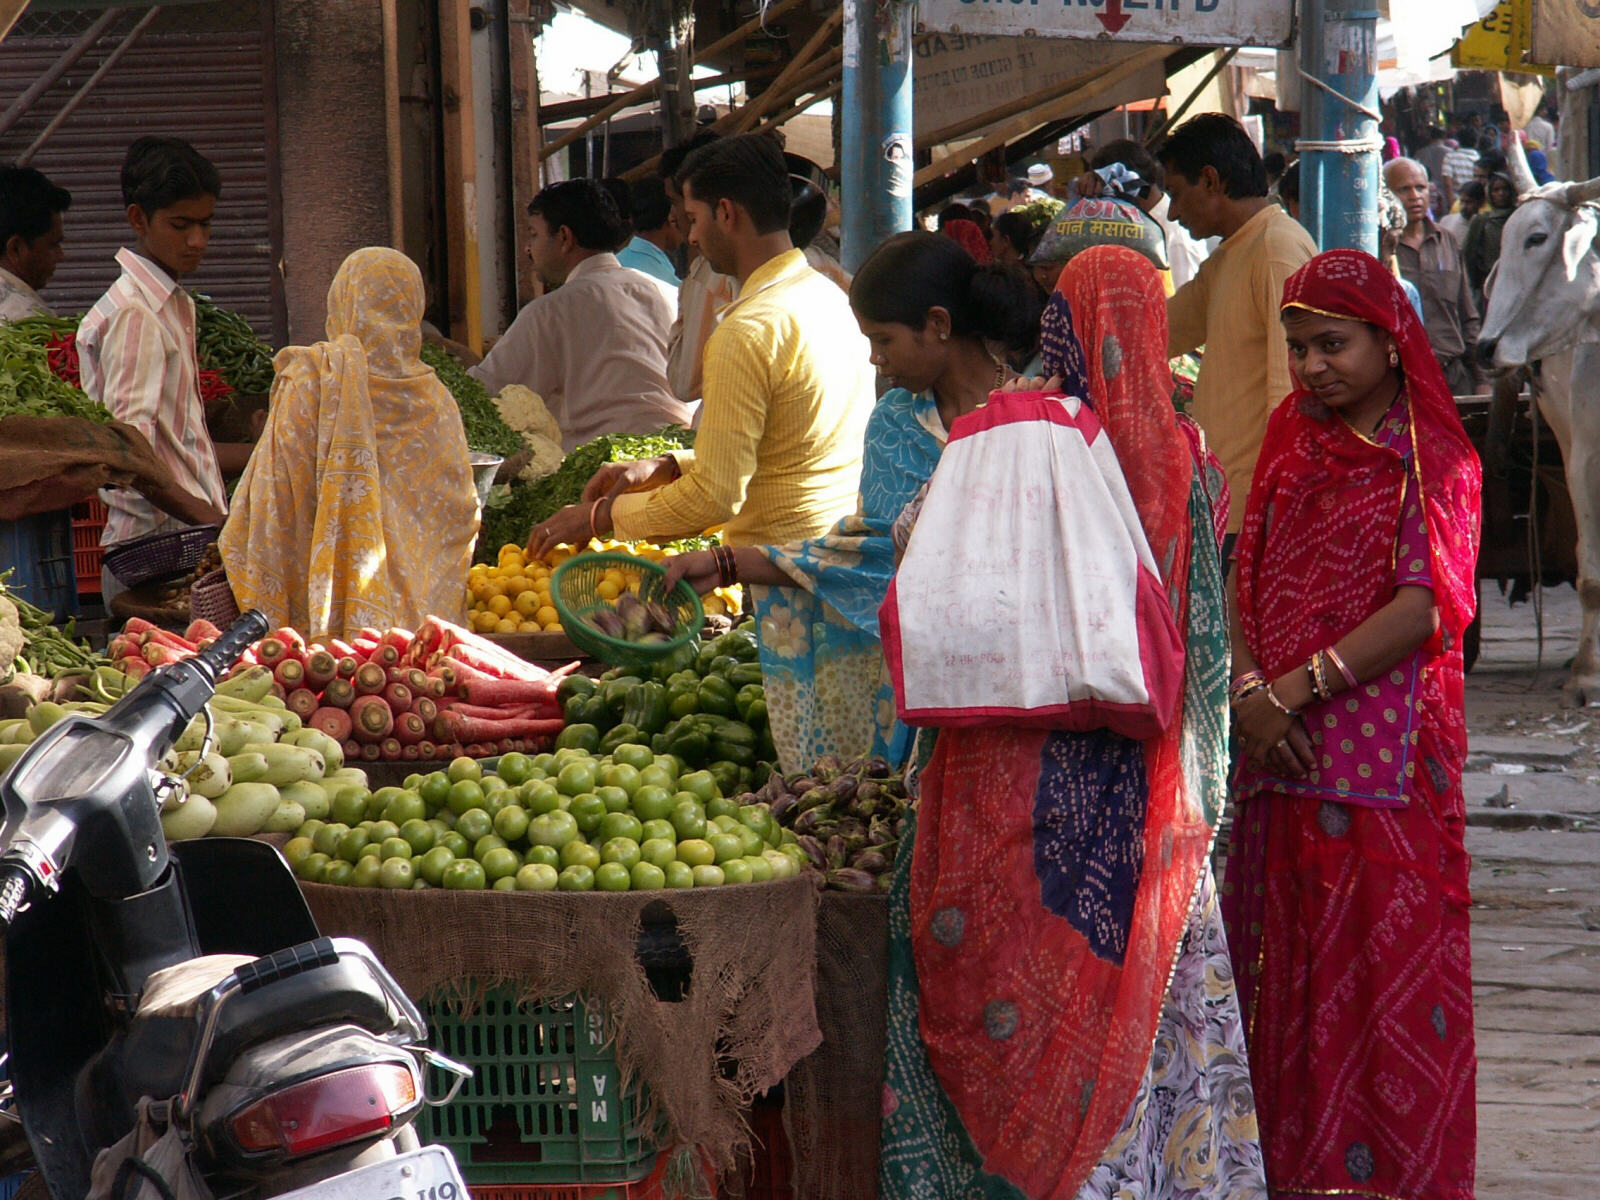 In Sardar market, Jodhpur, Rajasthan